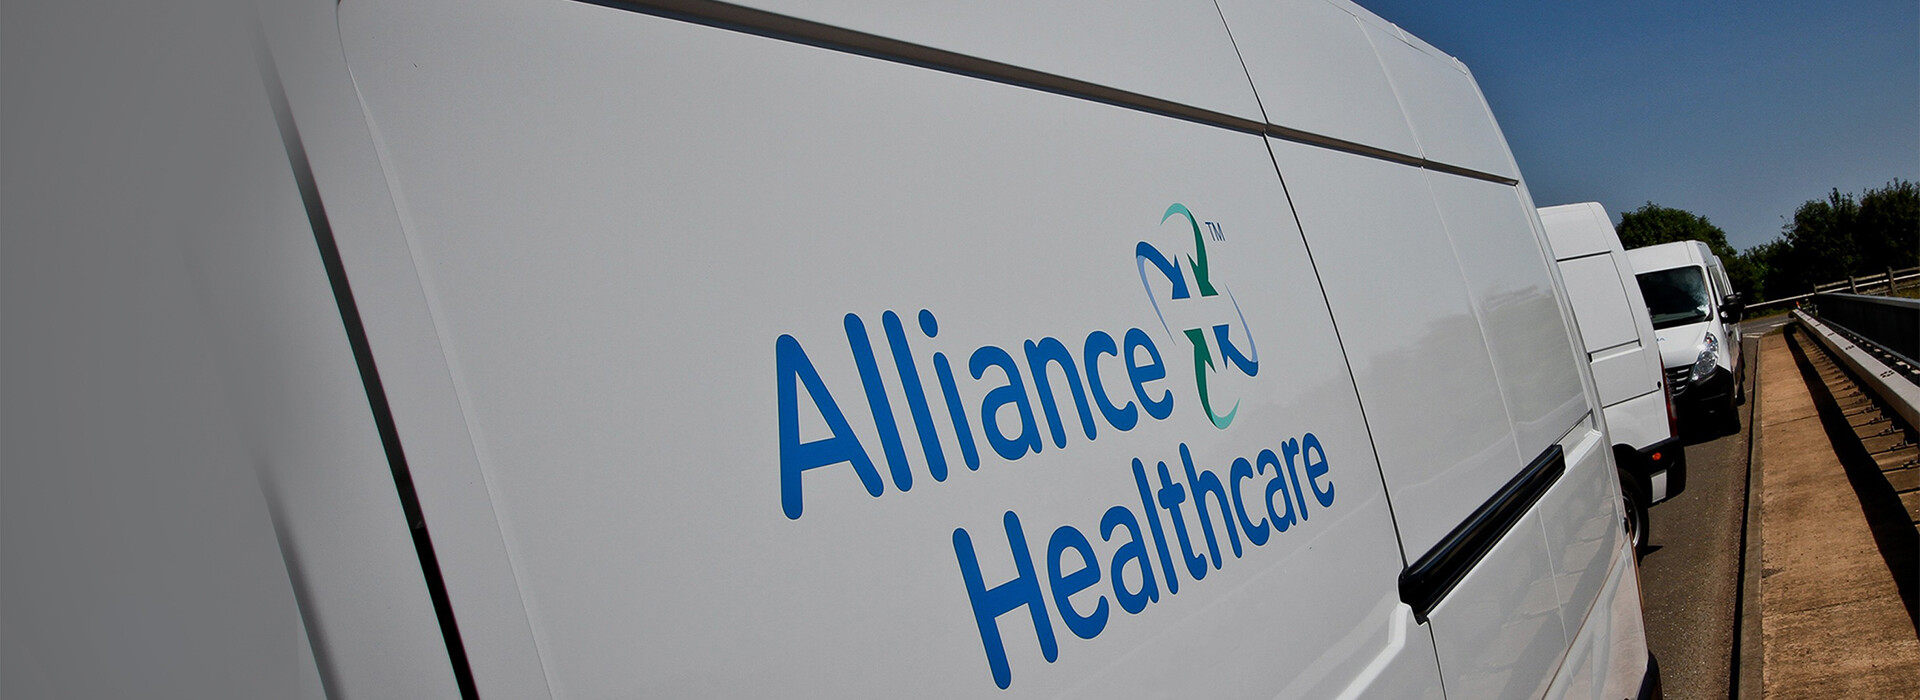 Alliance Healthcare